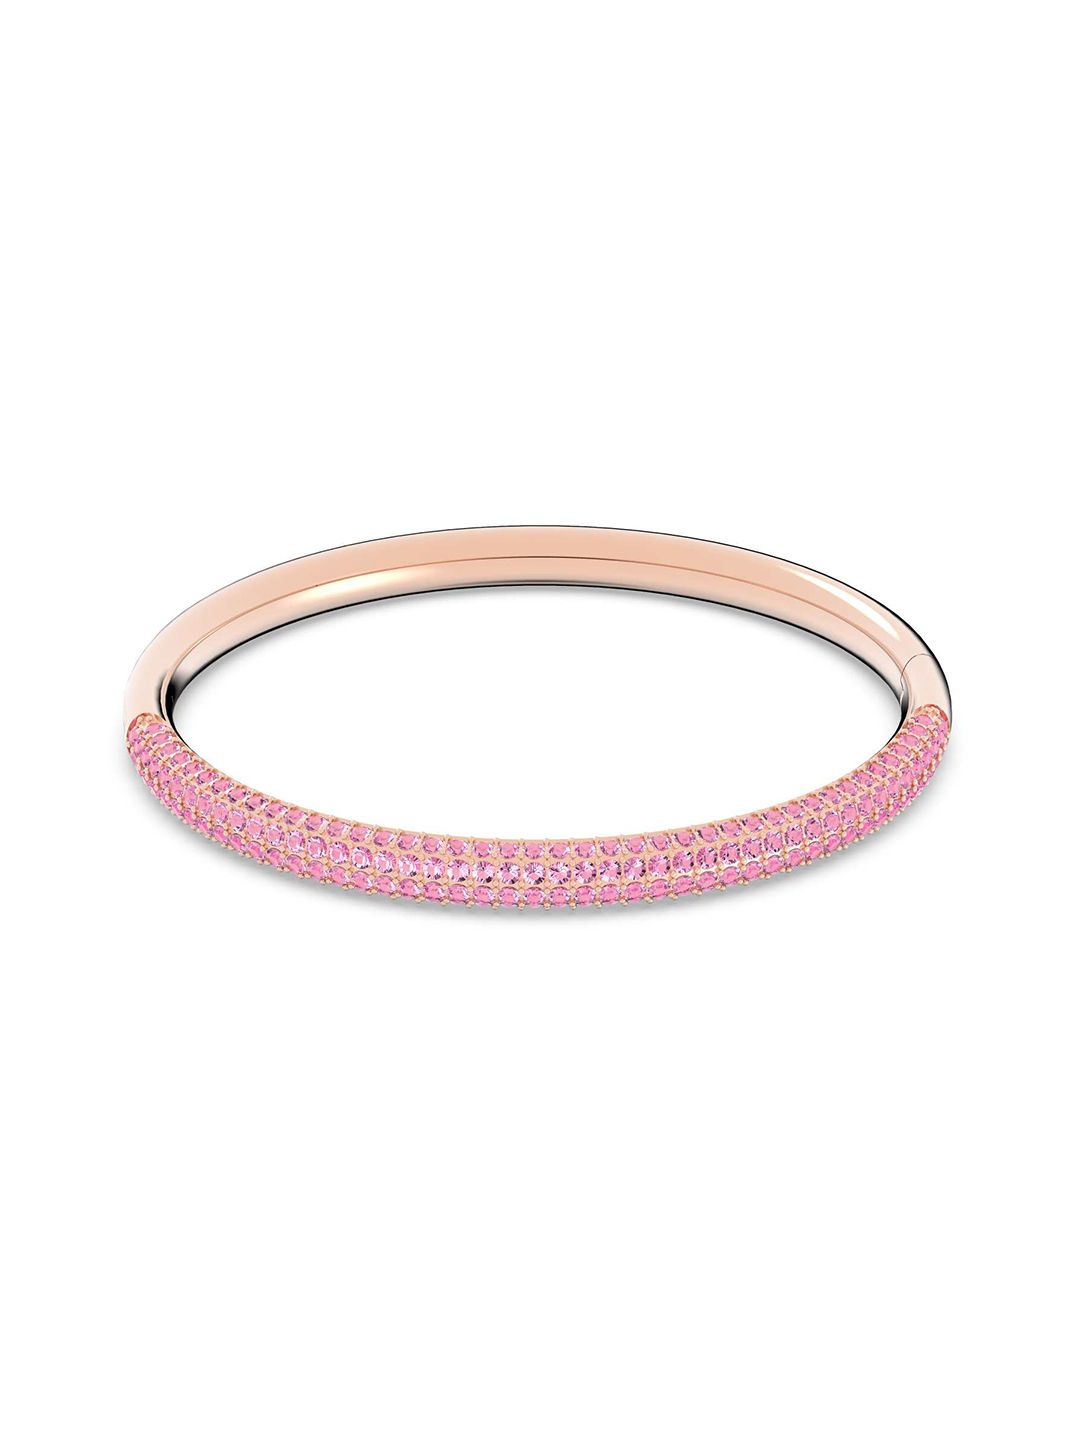 SWAROVSKI Pink Crystals Rose Gold-Plated Bangle-Style Bracelet Price in India